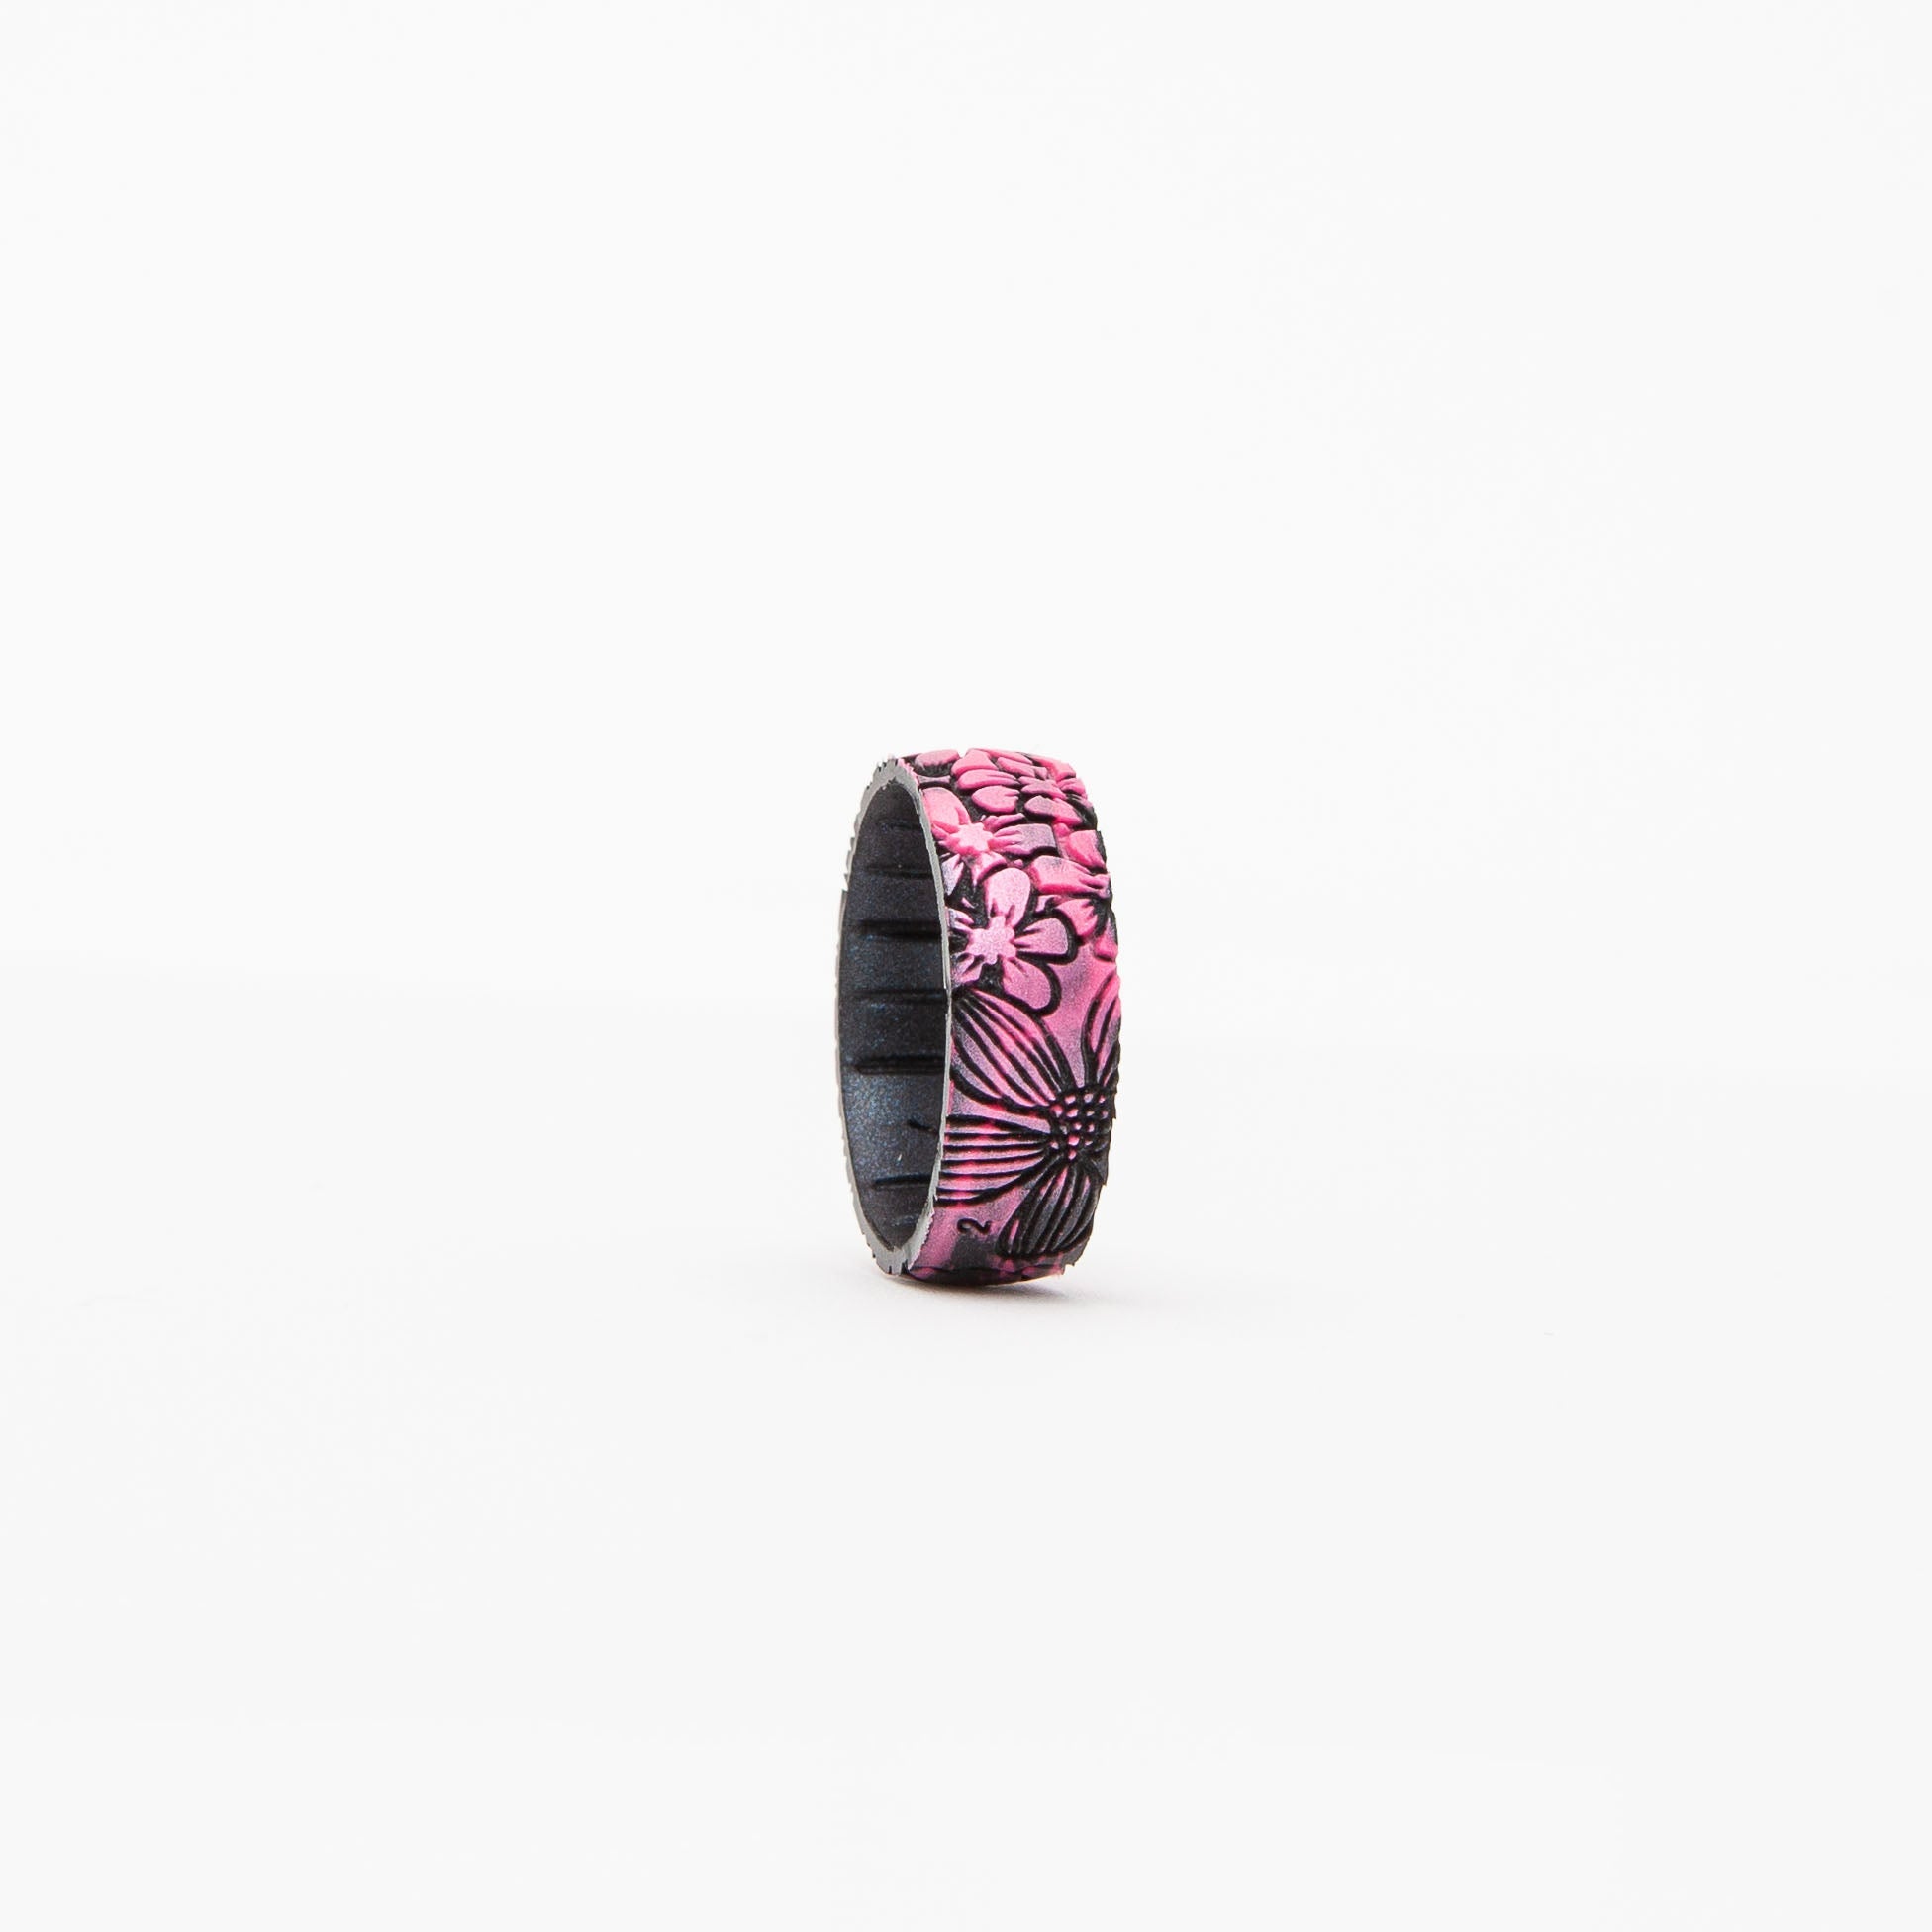 Flirtatiously Flowering Pink Ring - Jewelry by Bretta